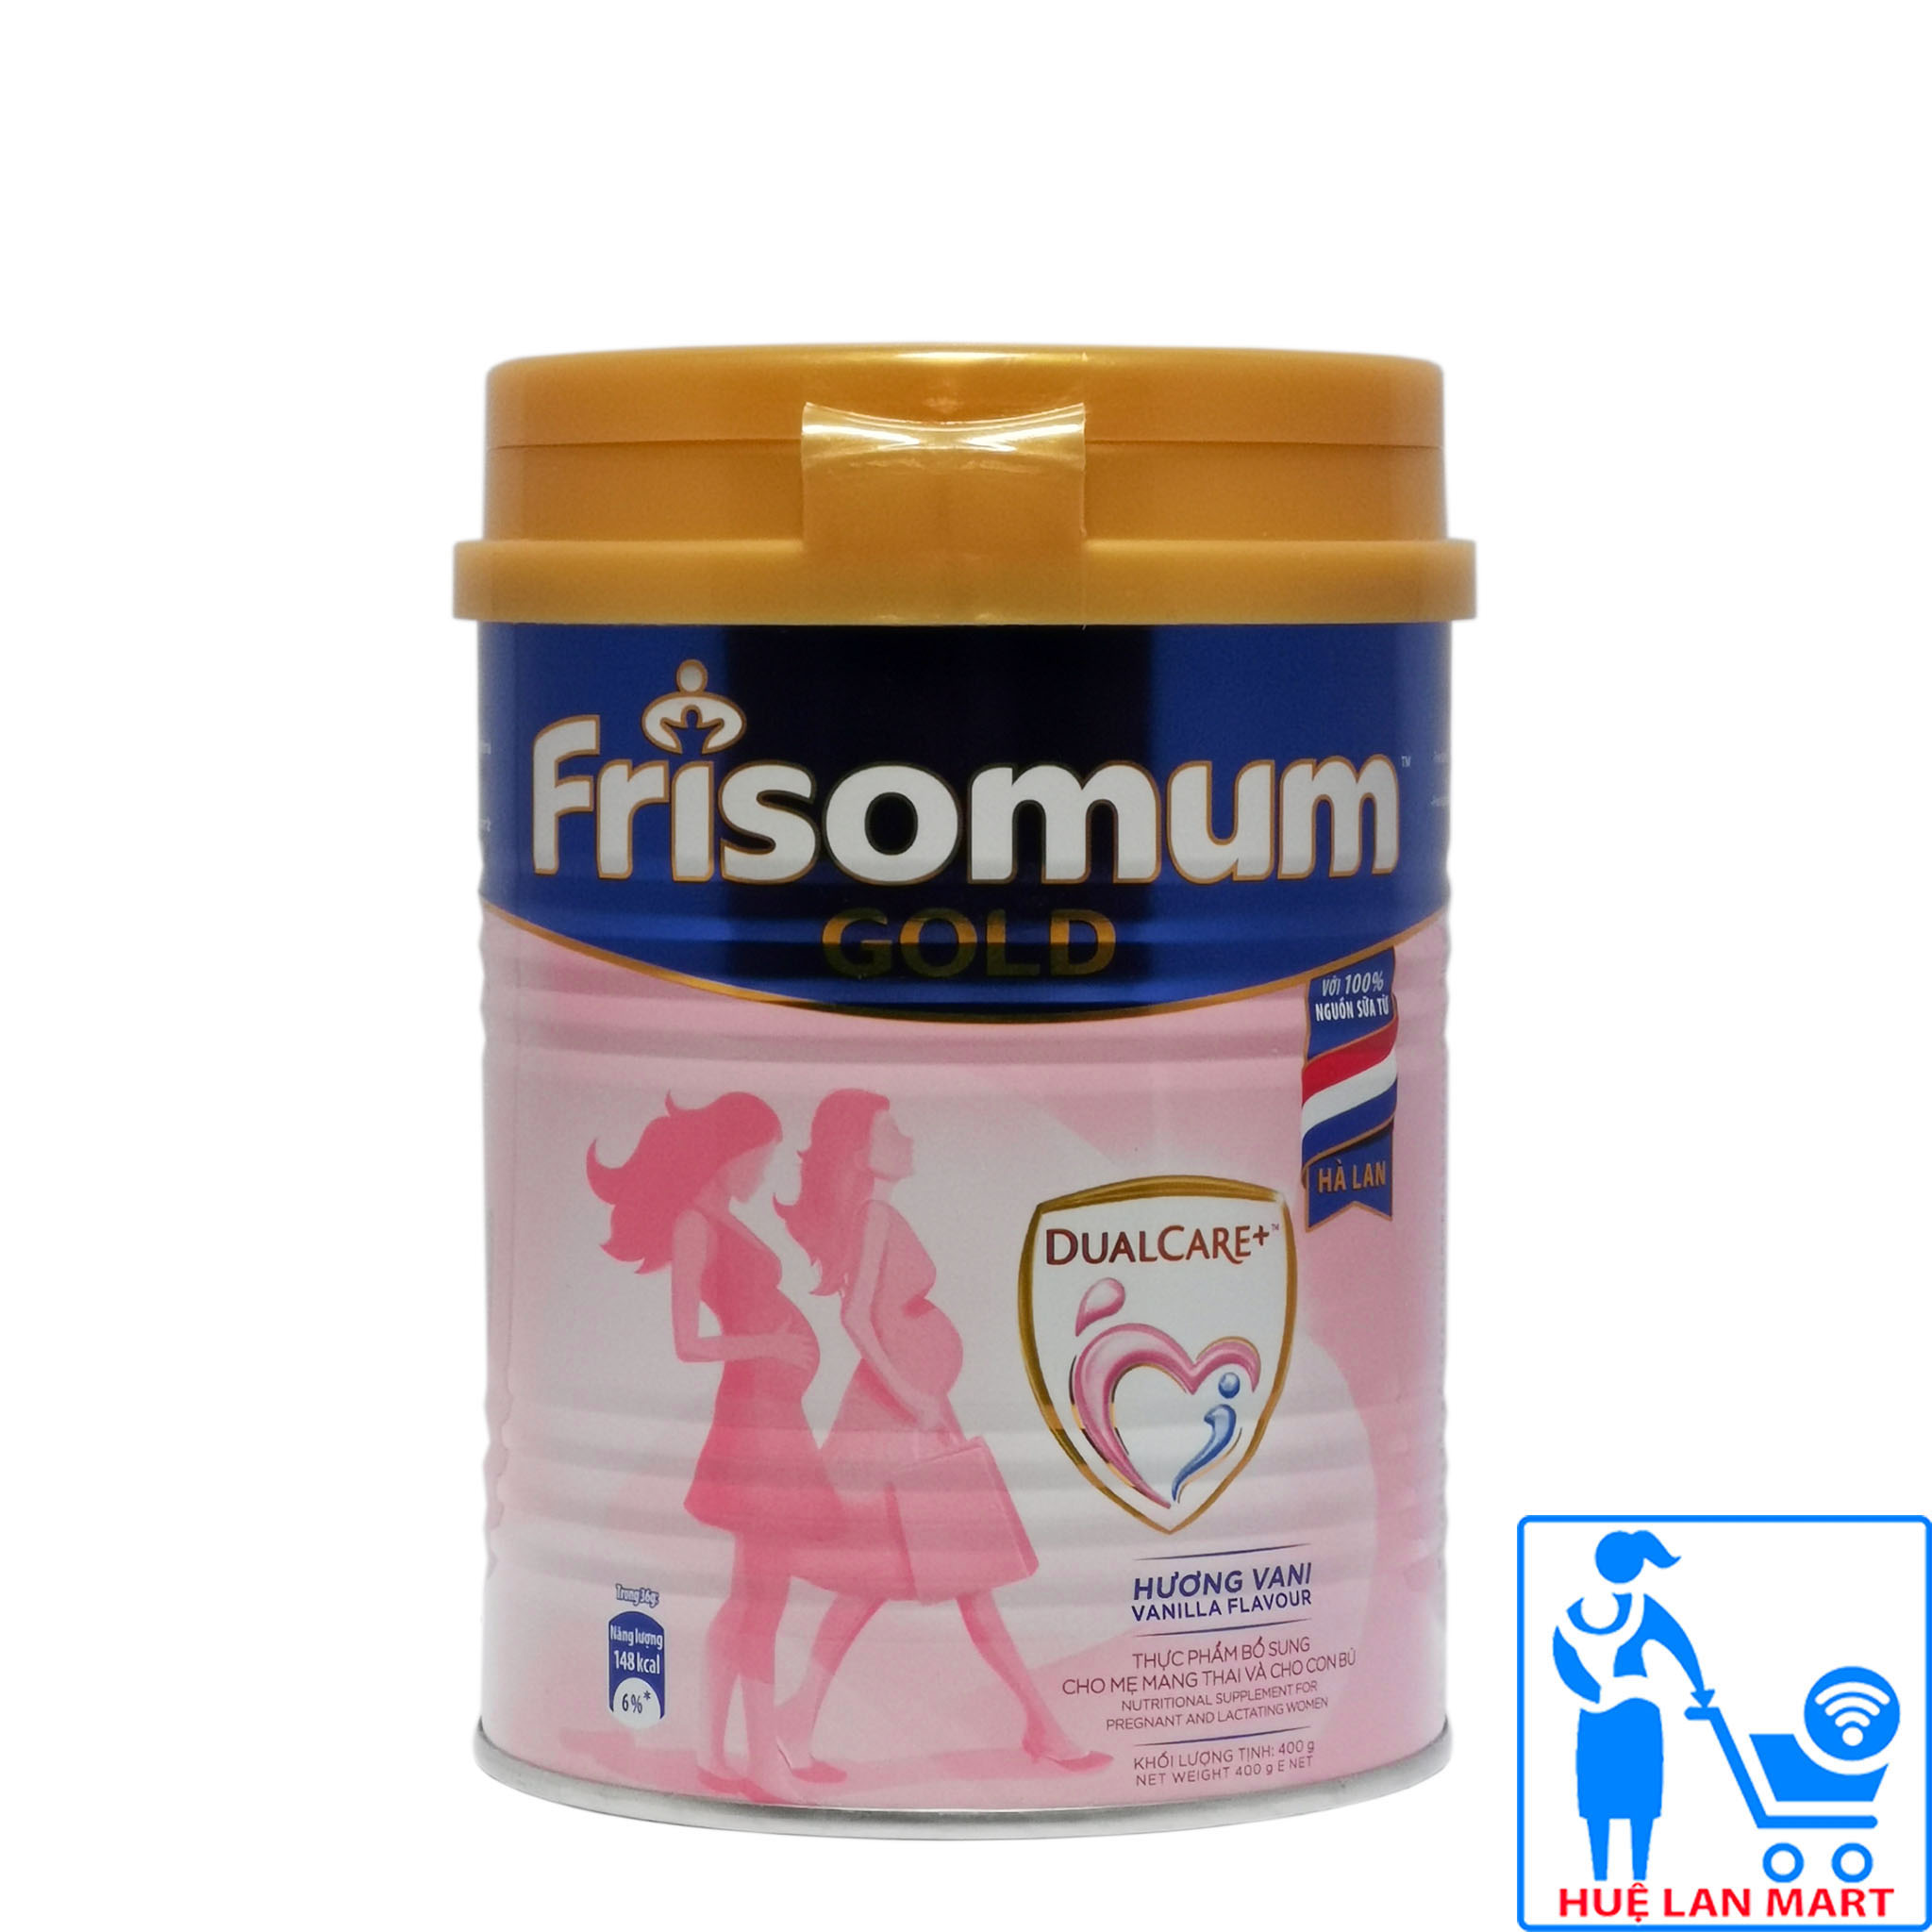 Sữa Bột Friesland Campina Frisomum Gold Dualcare+ Hương Vani Hộp 400g